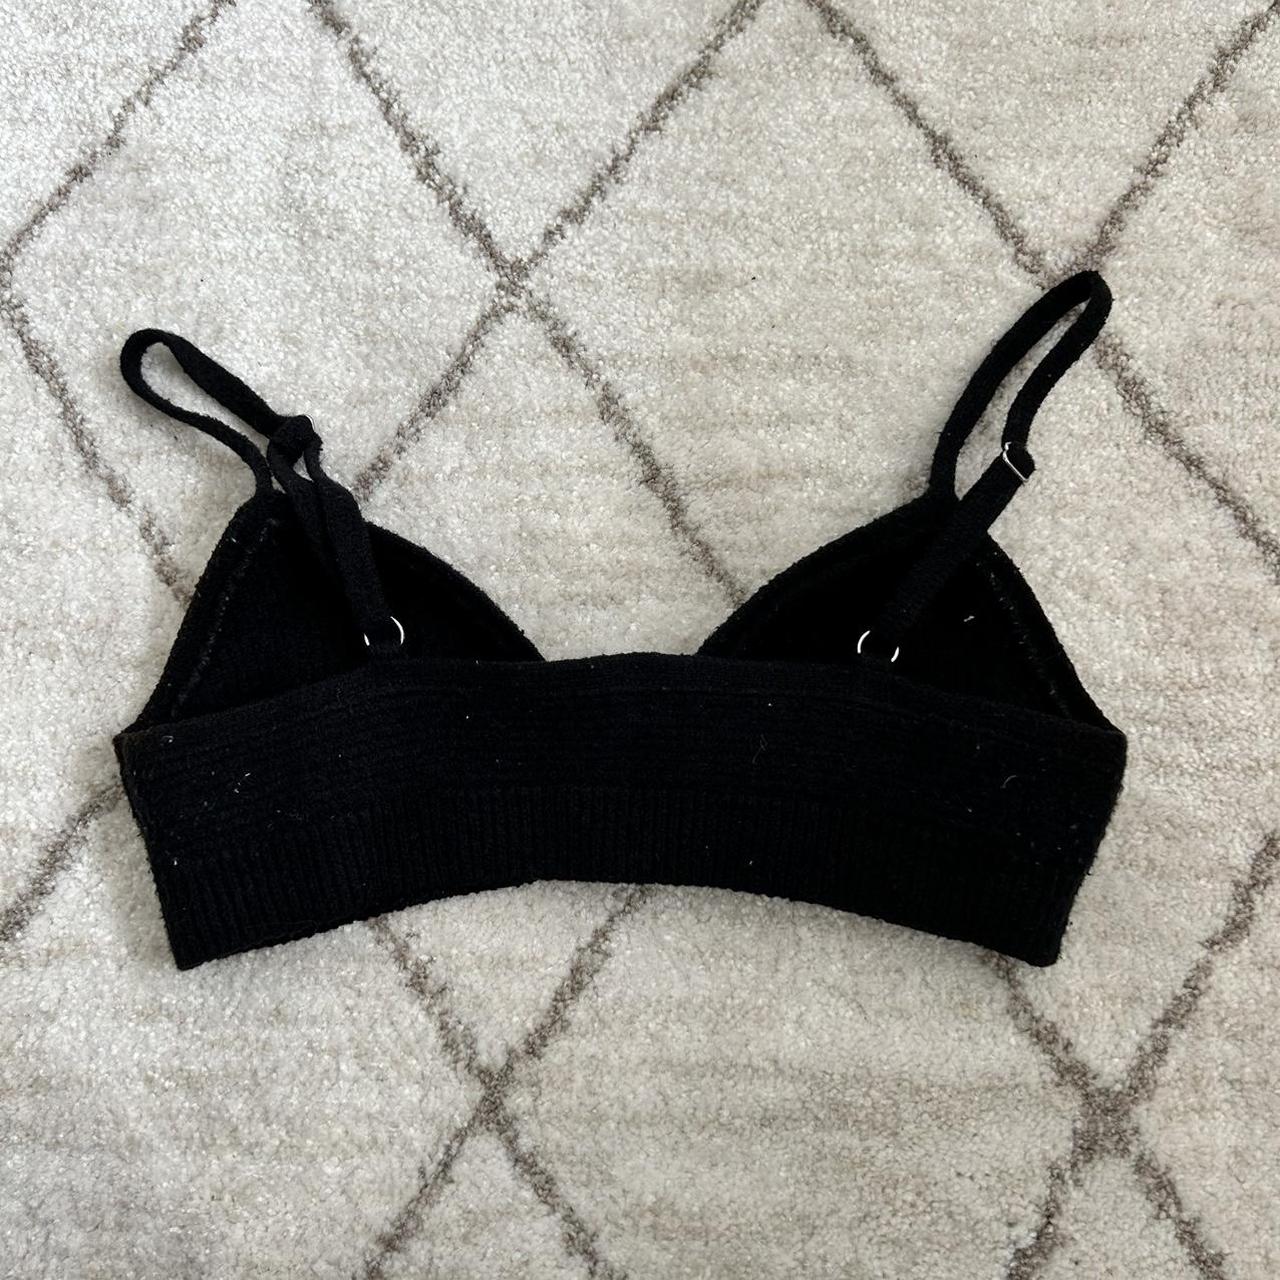 Helmut Lang black knit bra top in size XS/S in great